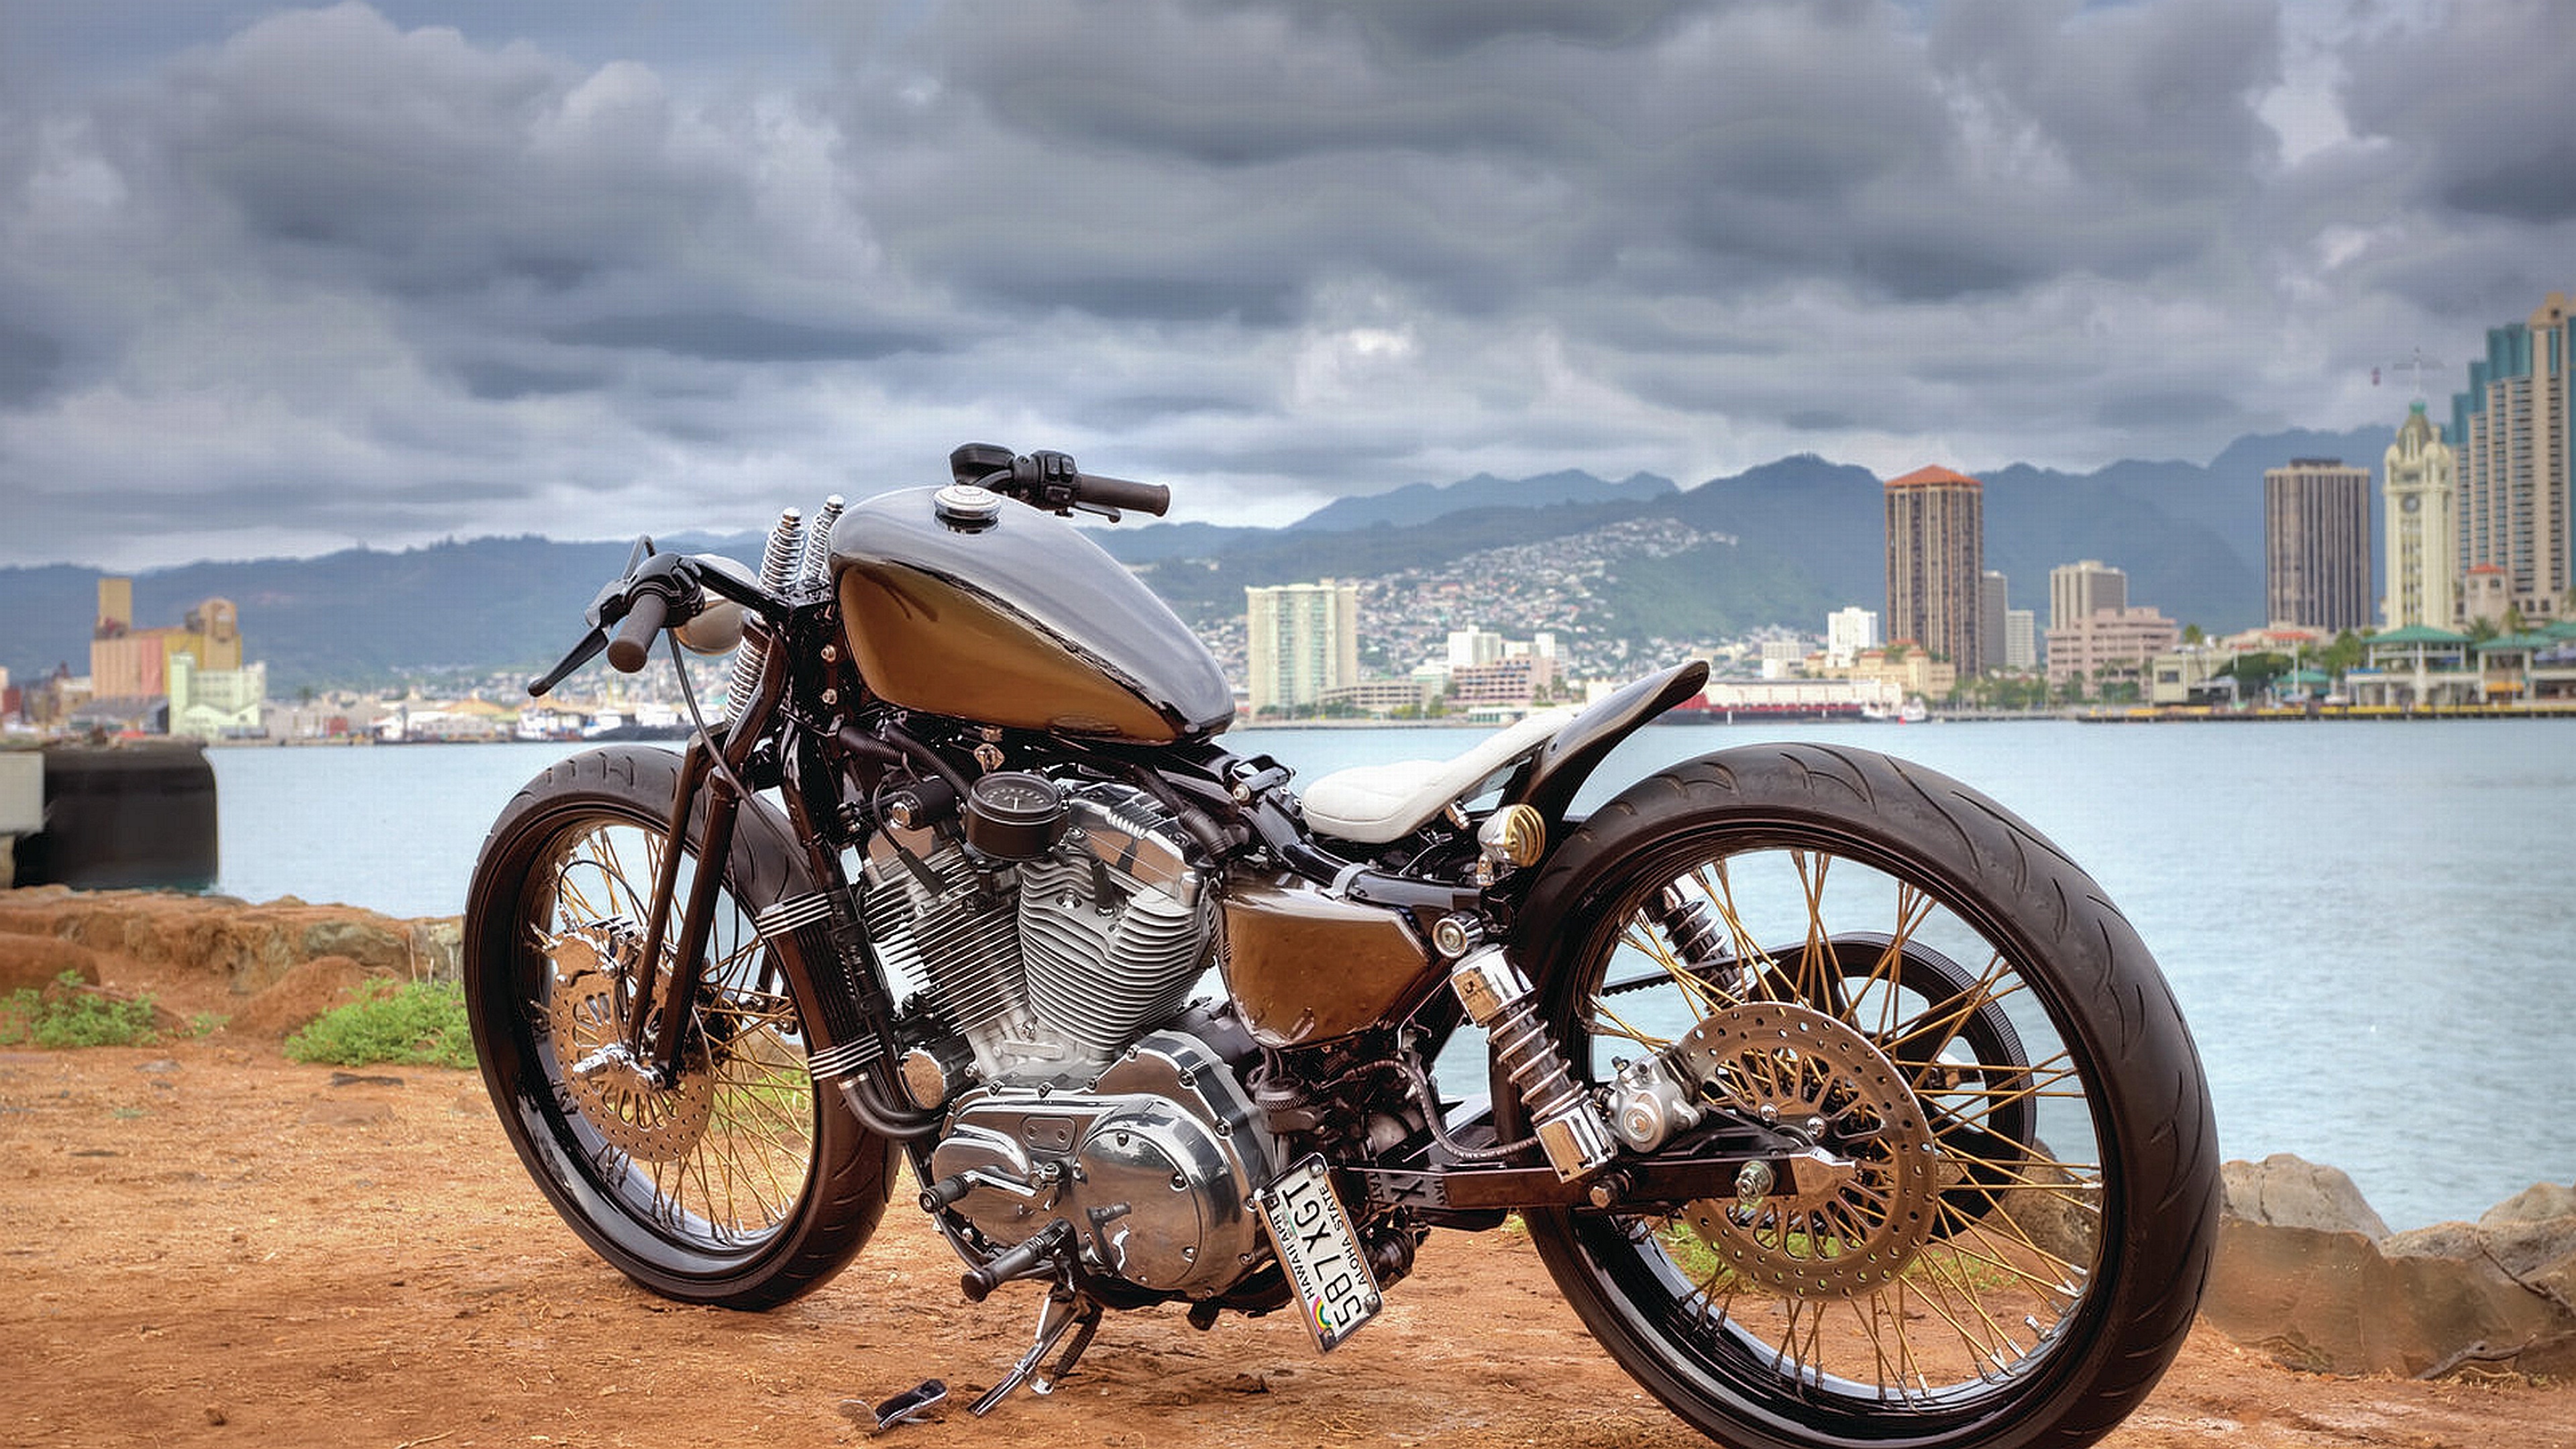 Harley Davidson, Powerful motorcycles, Ultra HD, Motorcycle enthusiasts, 3840x2160 4K Desktop